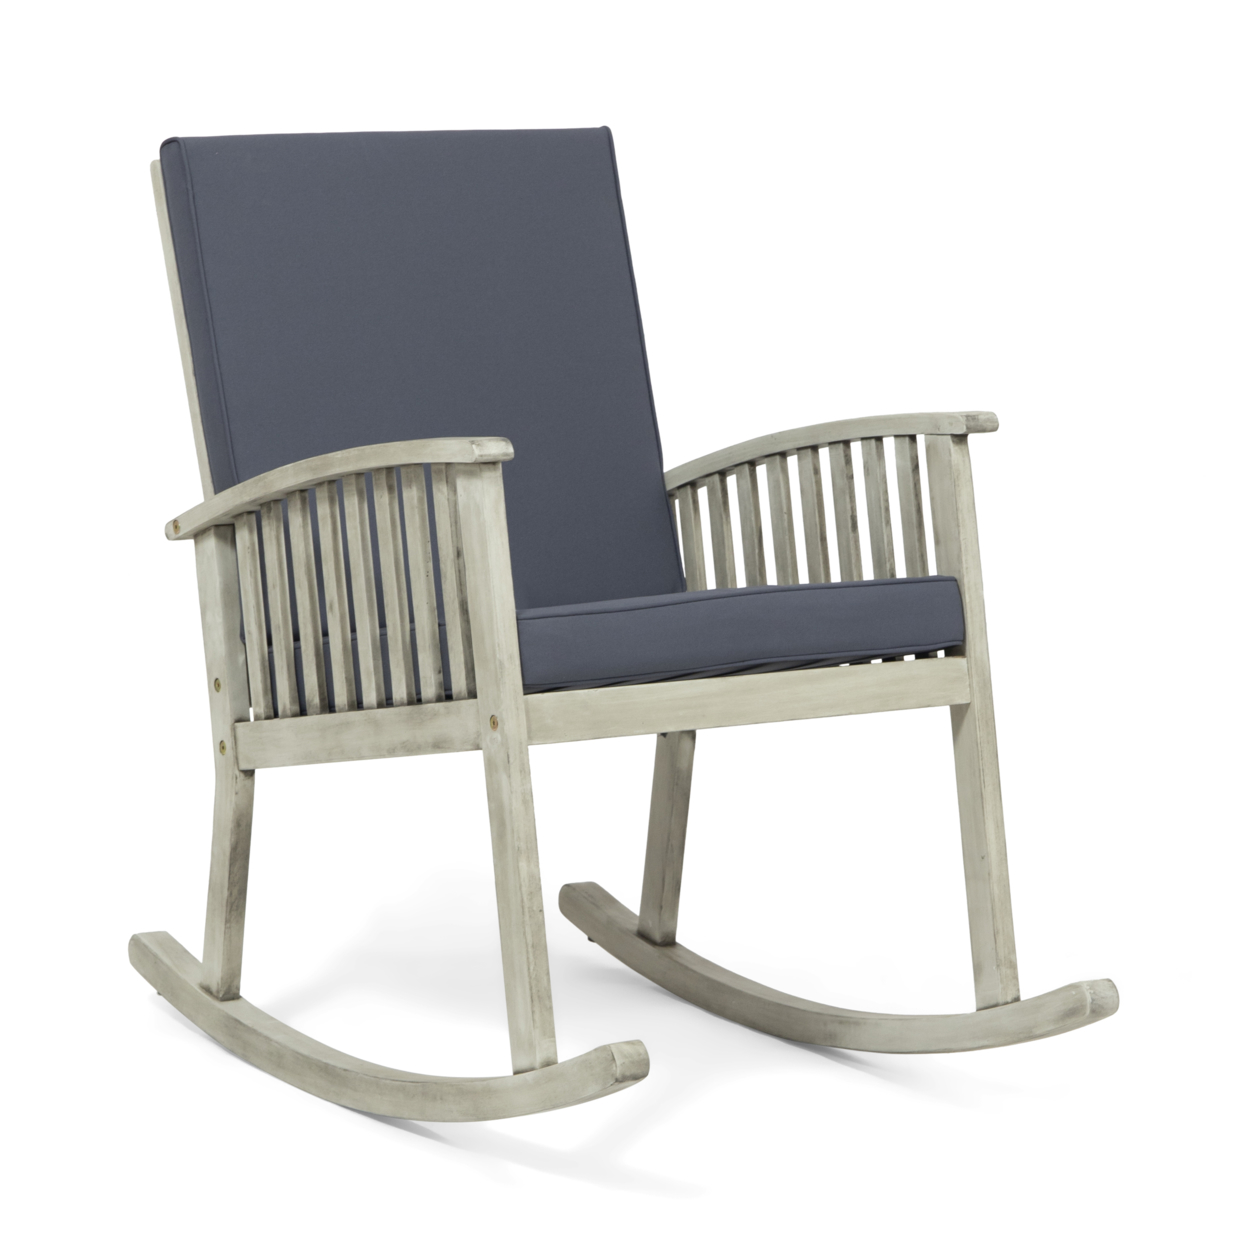 Beulah Outdoor Acacia Wood Rocking Chair - Light Gray Finish, Dark Gray